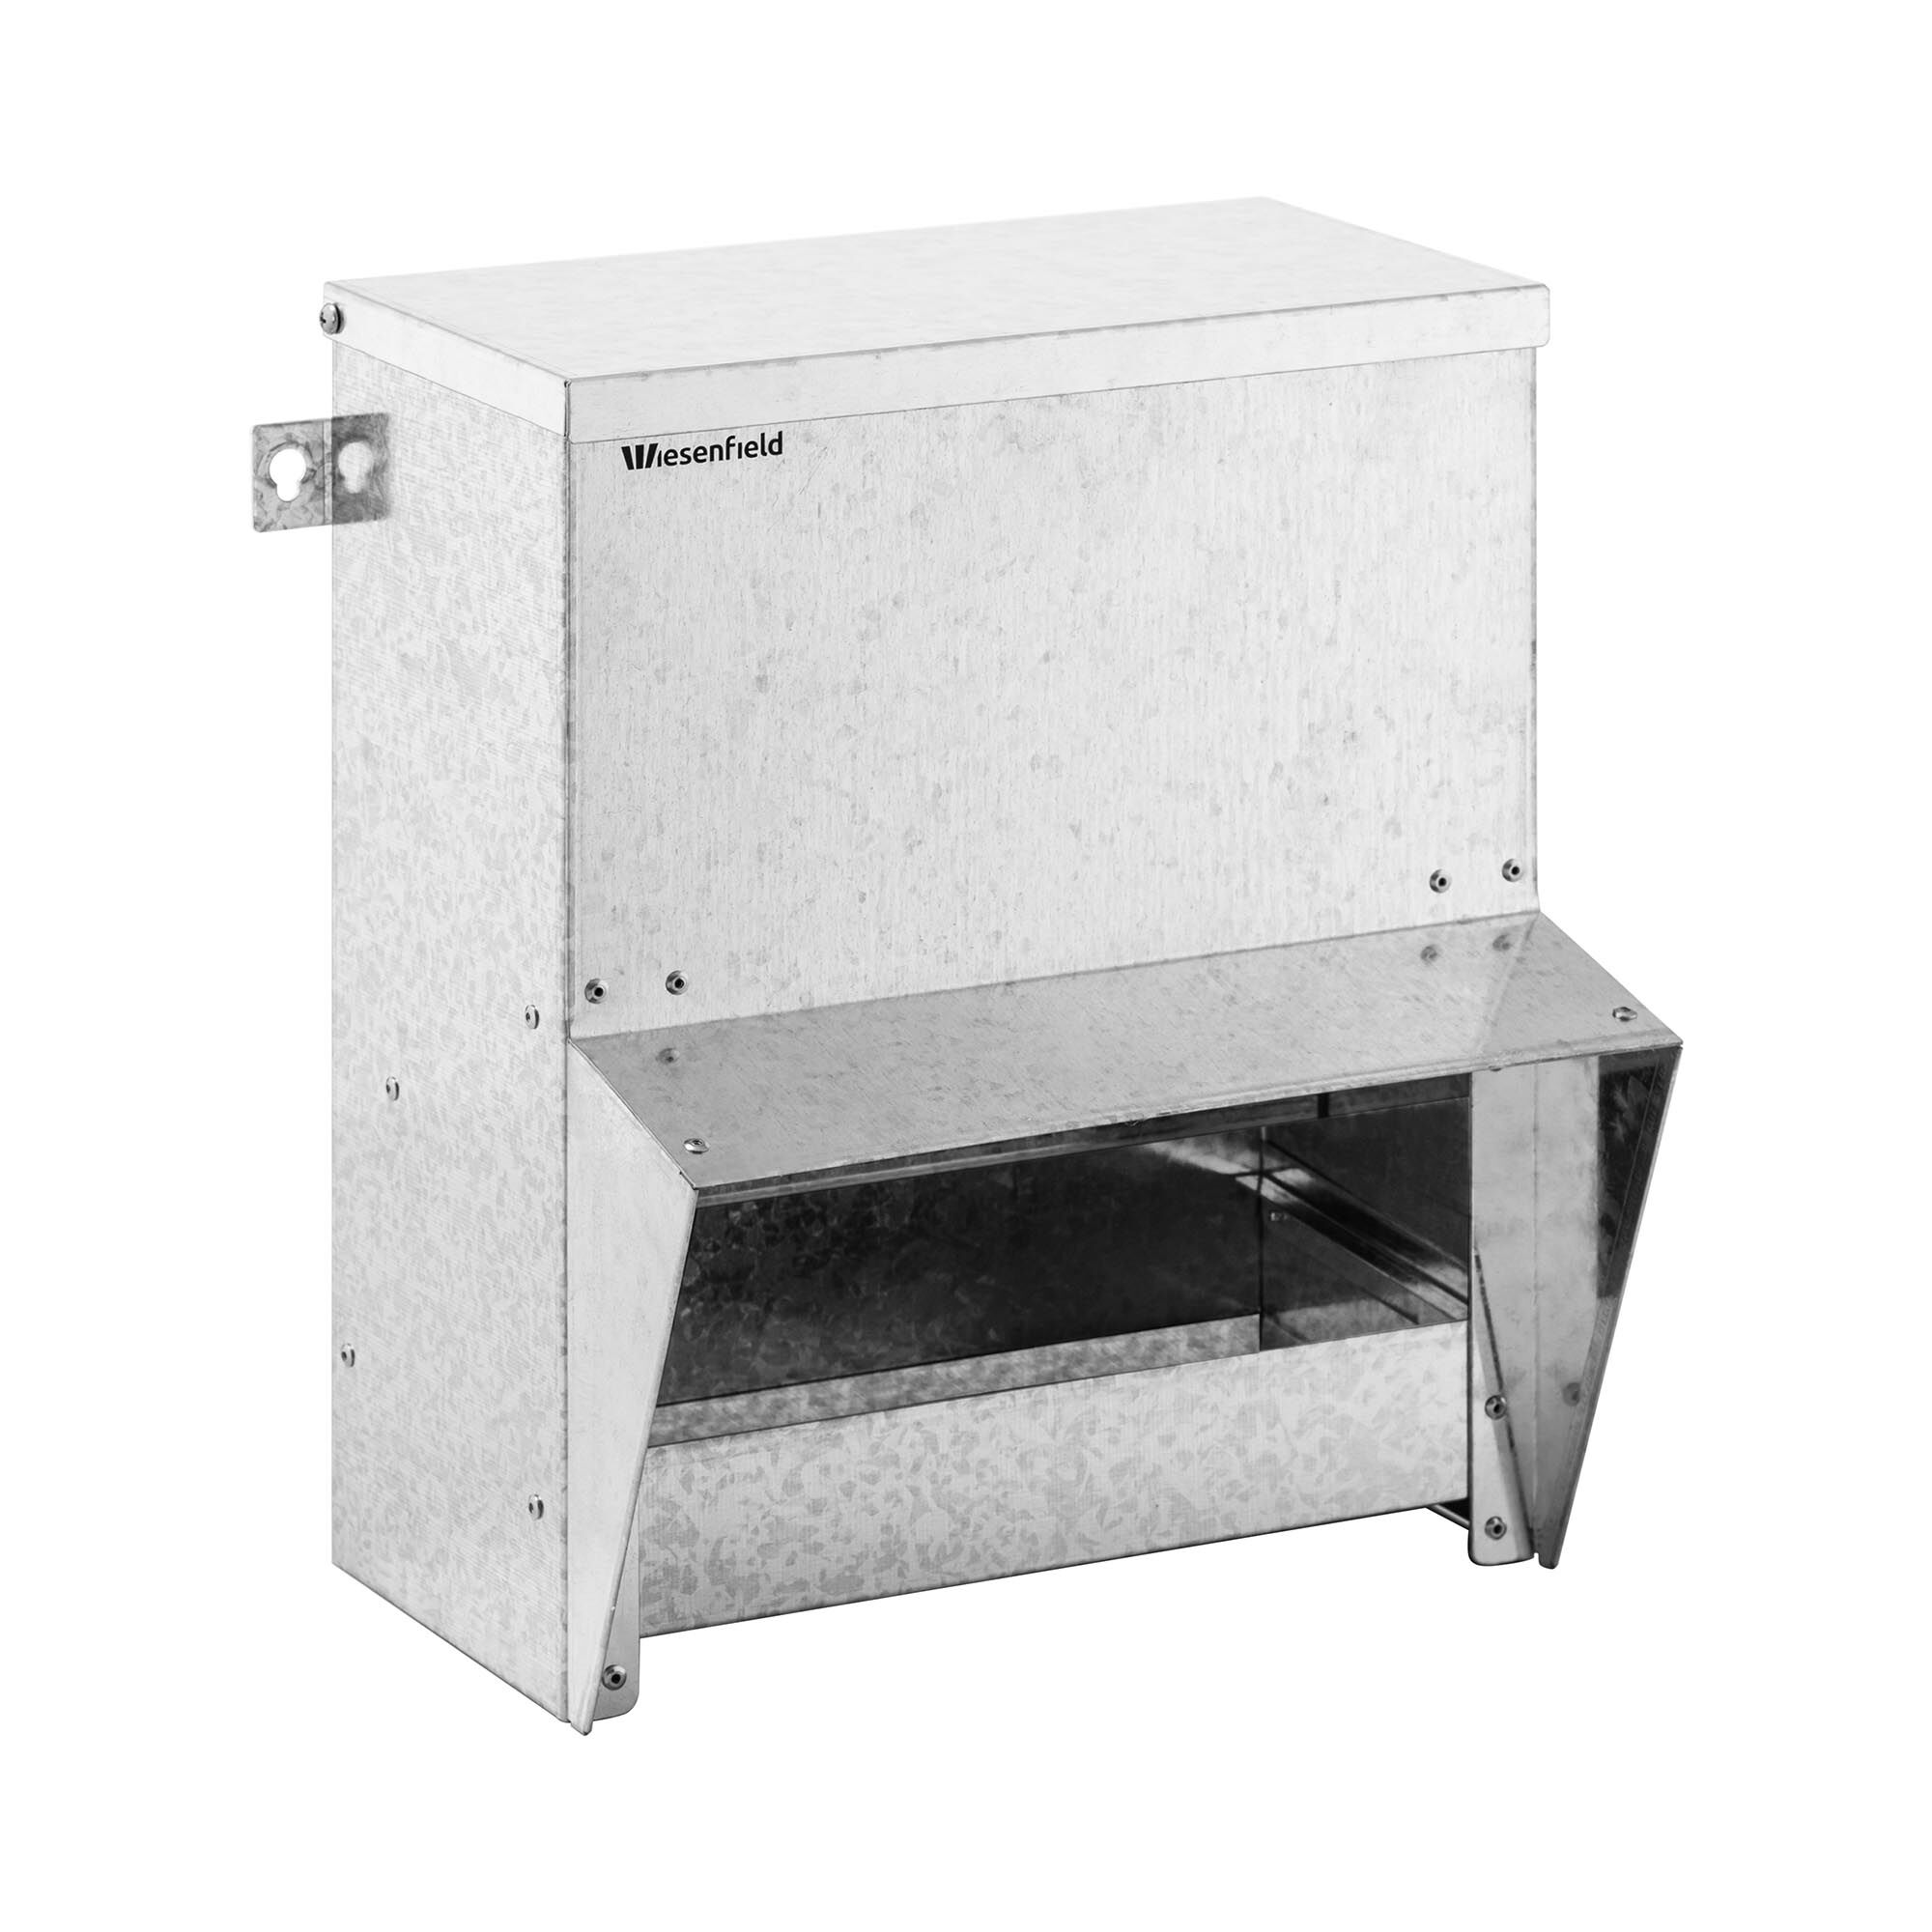 Wiesenfield Fôrautomat - 5 kg 10280040